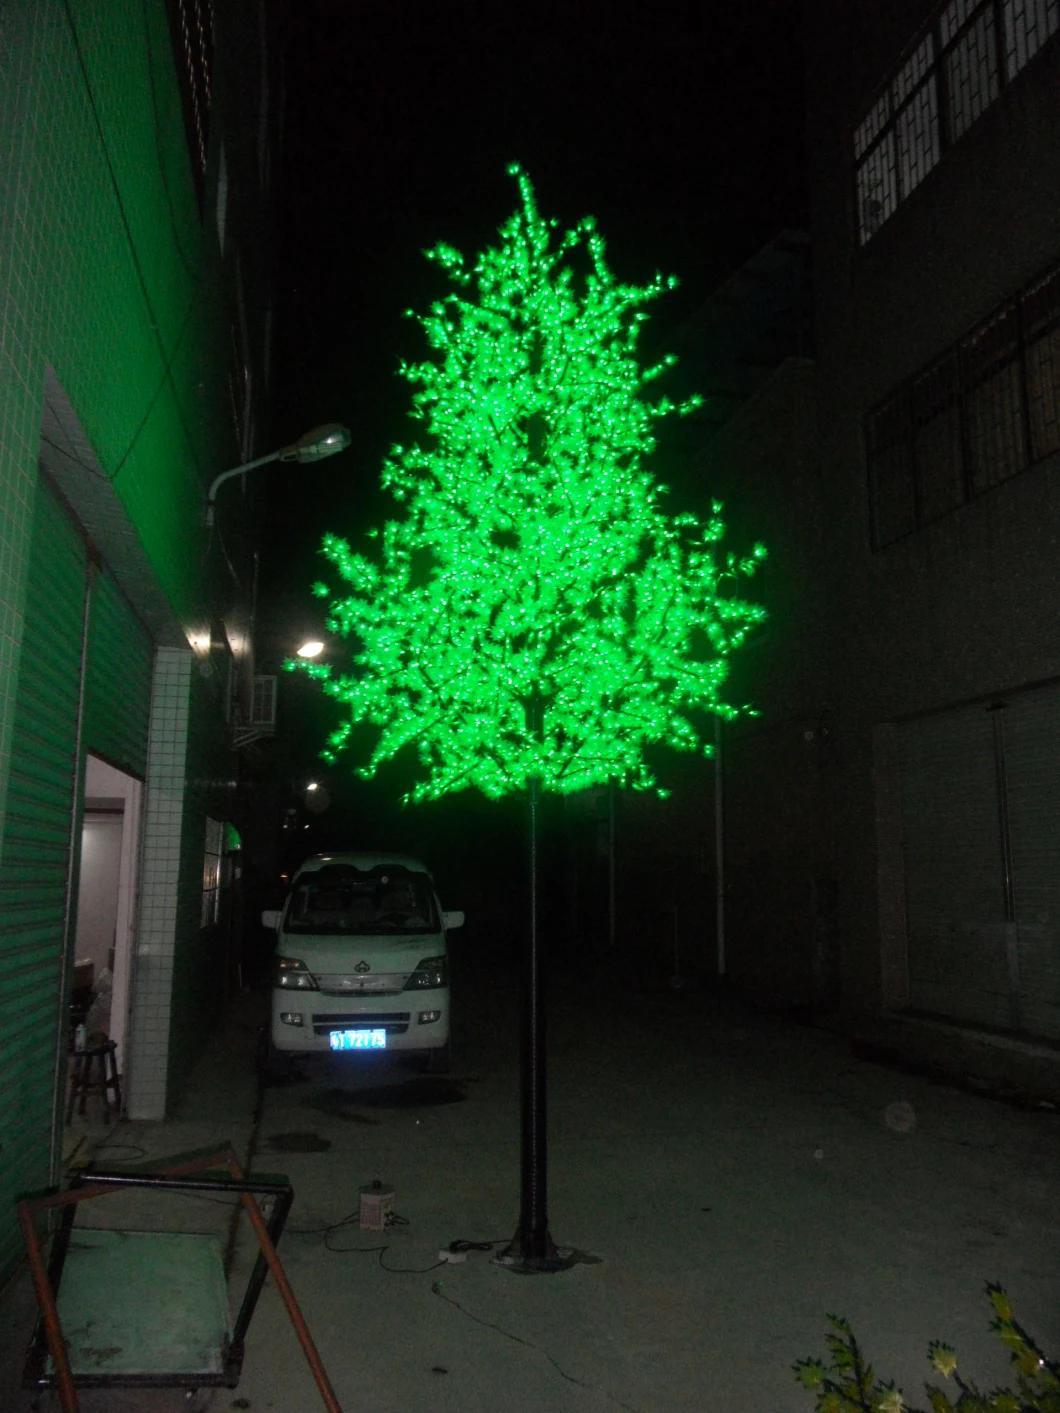 Yaye CE & RoHS Approval LED Orange Tree Light, LED Christmas Tree Light with 2 Years Warranty